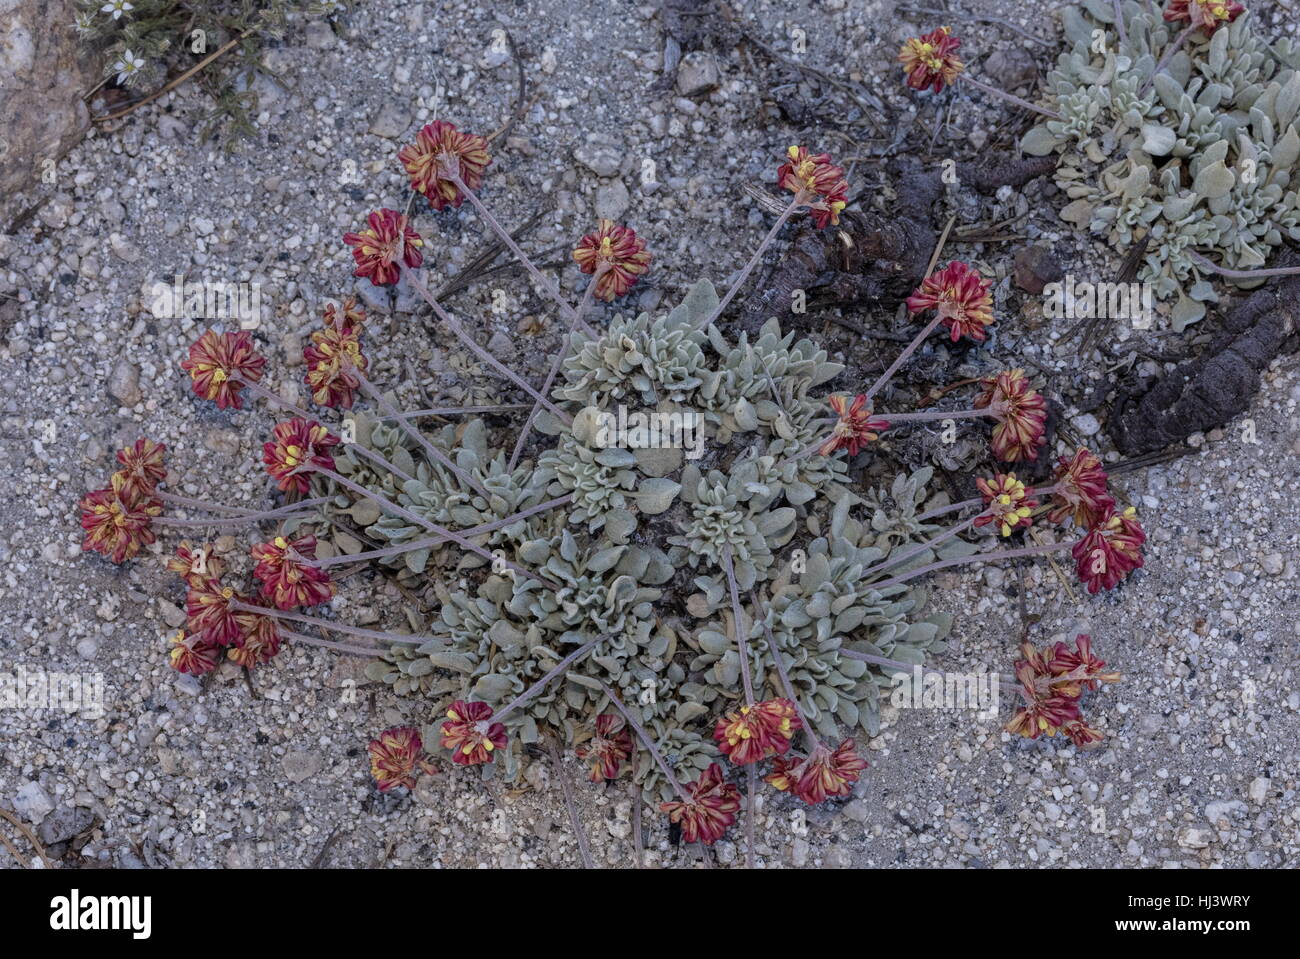 Lobb's buckwheat, Eriogonum lobbii, in flower in granite gravel at c. 10,000 ft in the Sierra Nevada. Stock Photo